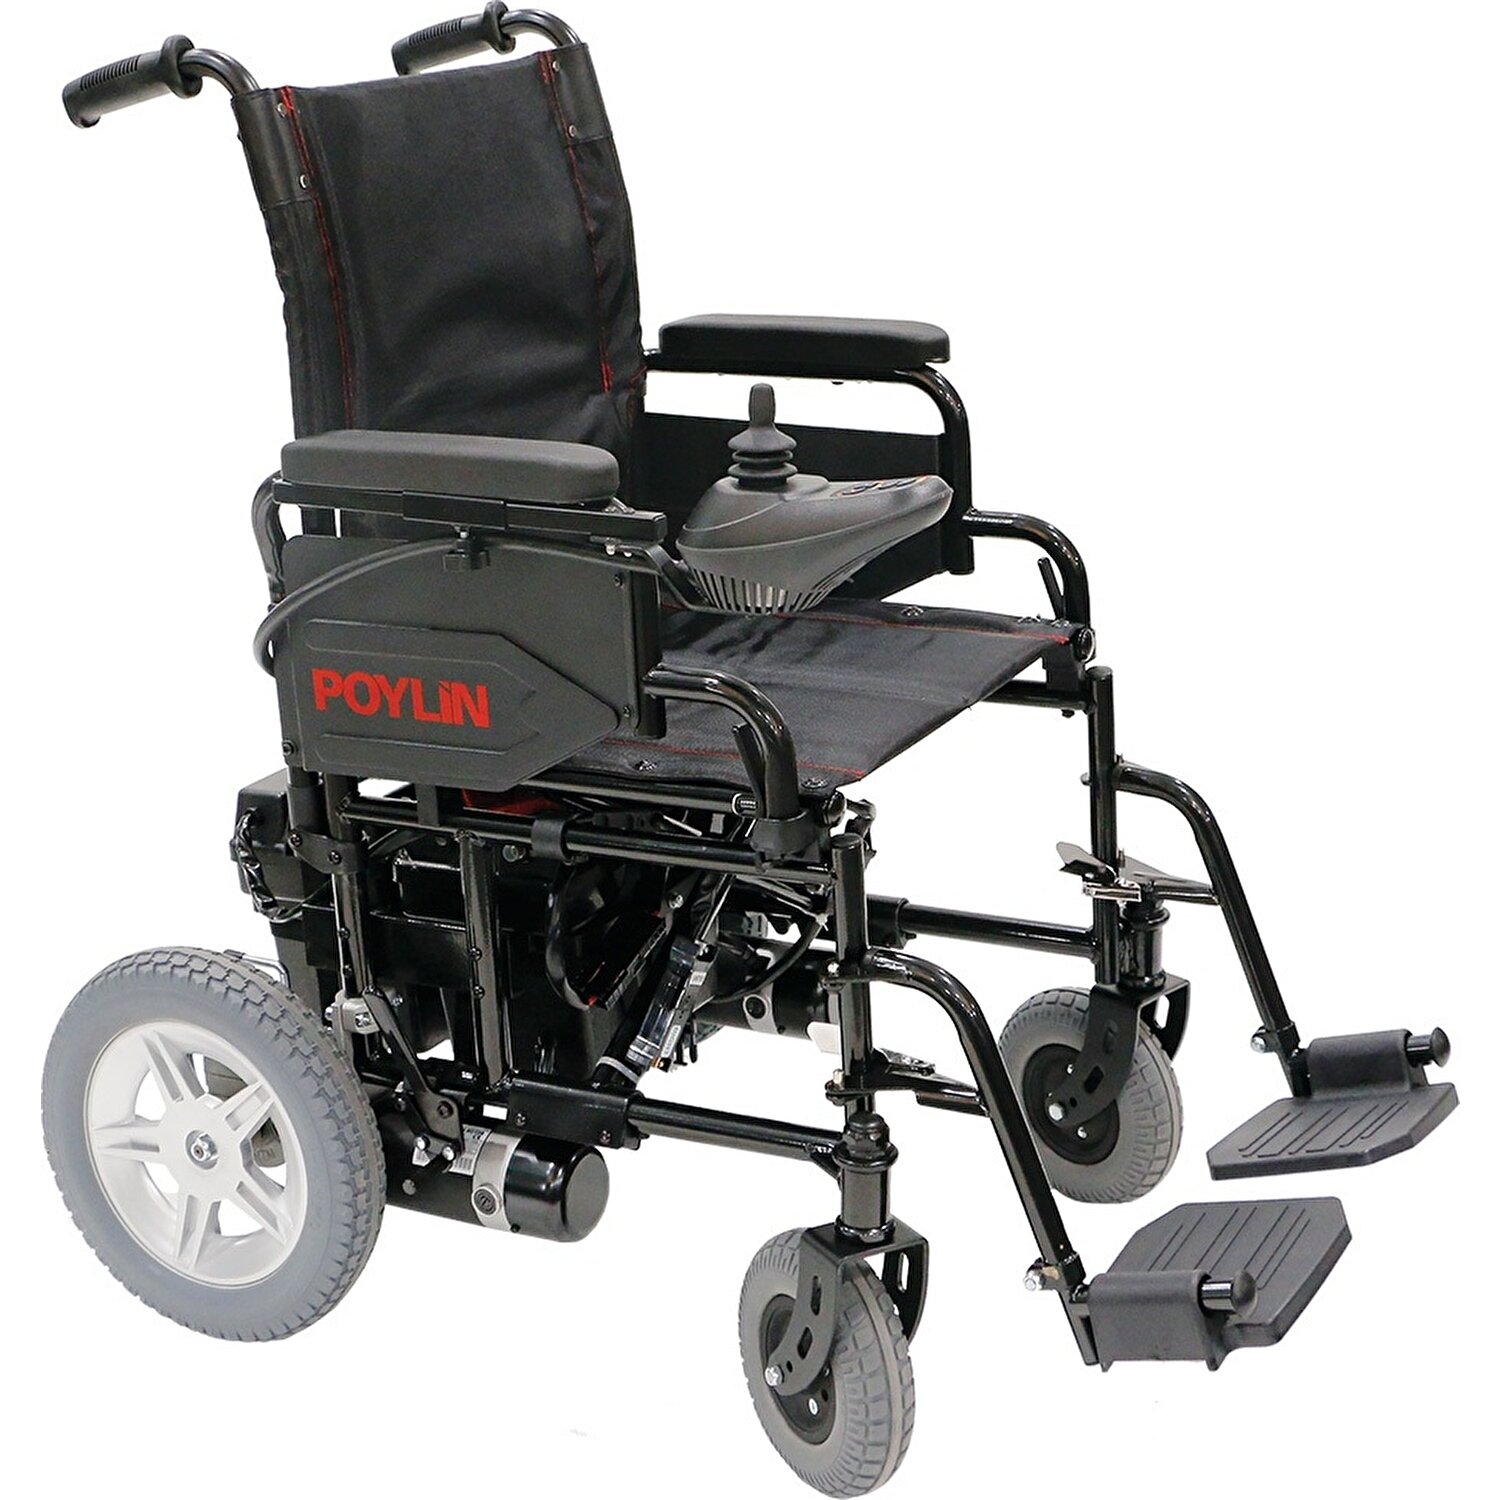 Akulu Sandalye Akusu Tekerlekli Sandalye Akulu Tekerlekli Sandalye Banyo Tuvalet Sandalyesi